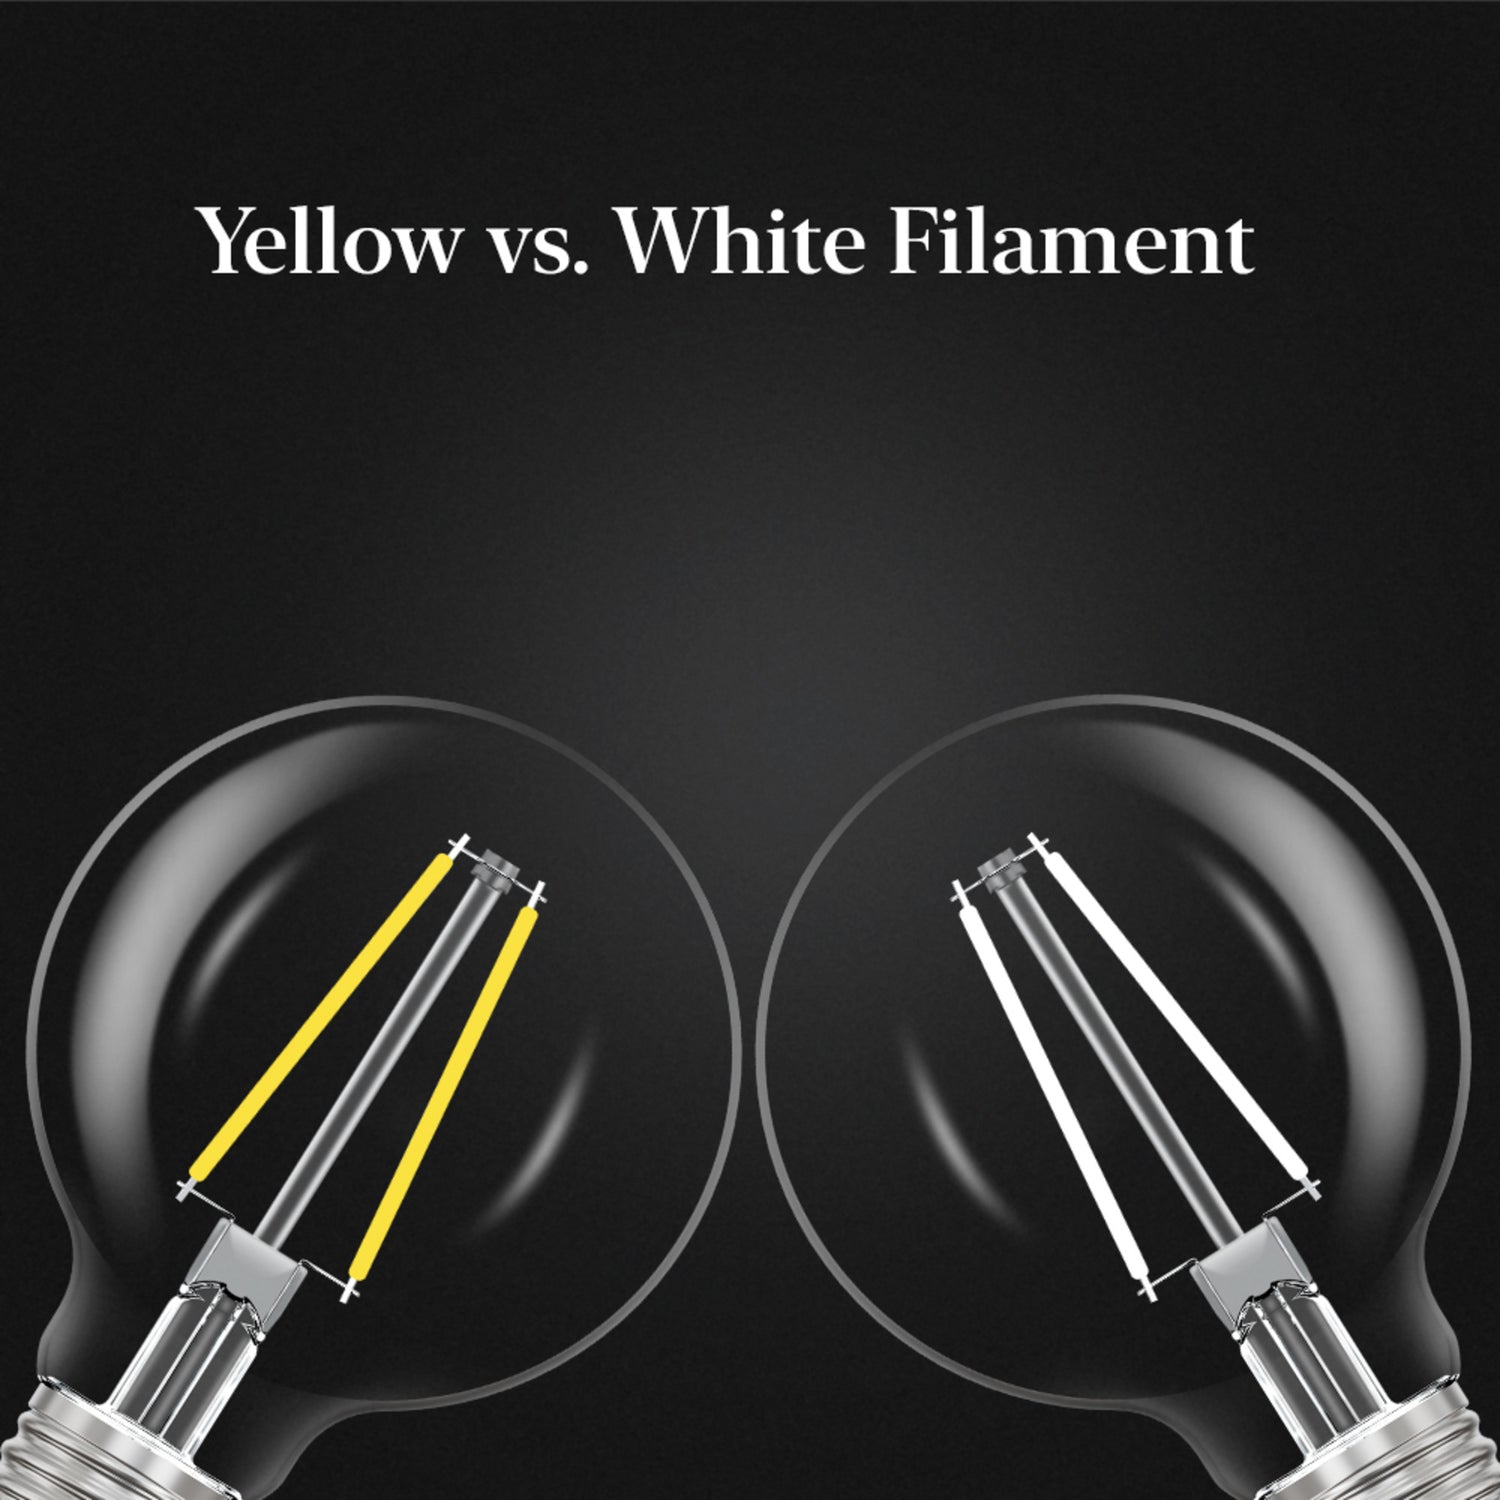 12W (100W Replacement) Soft White (2700K) Globe Shape (E26 Base) Exposed White Filament LED Bulb